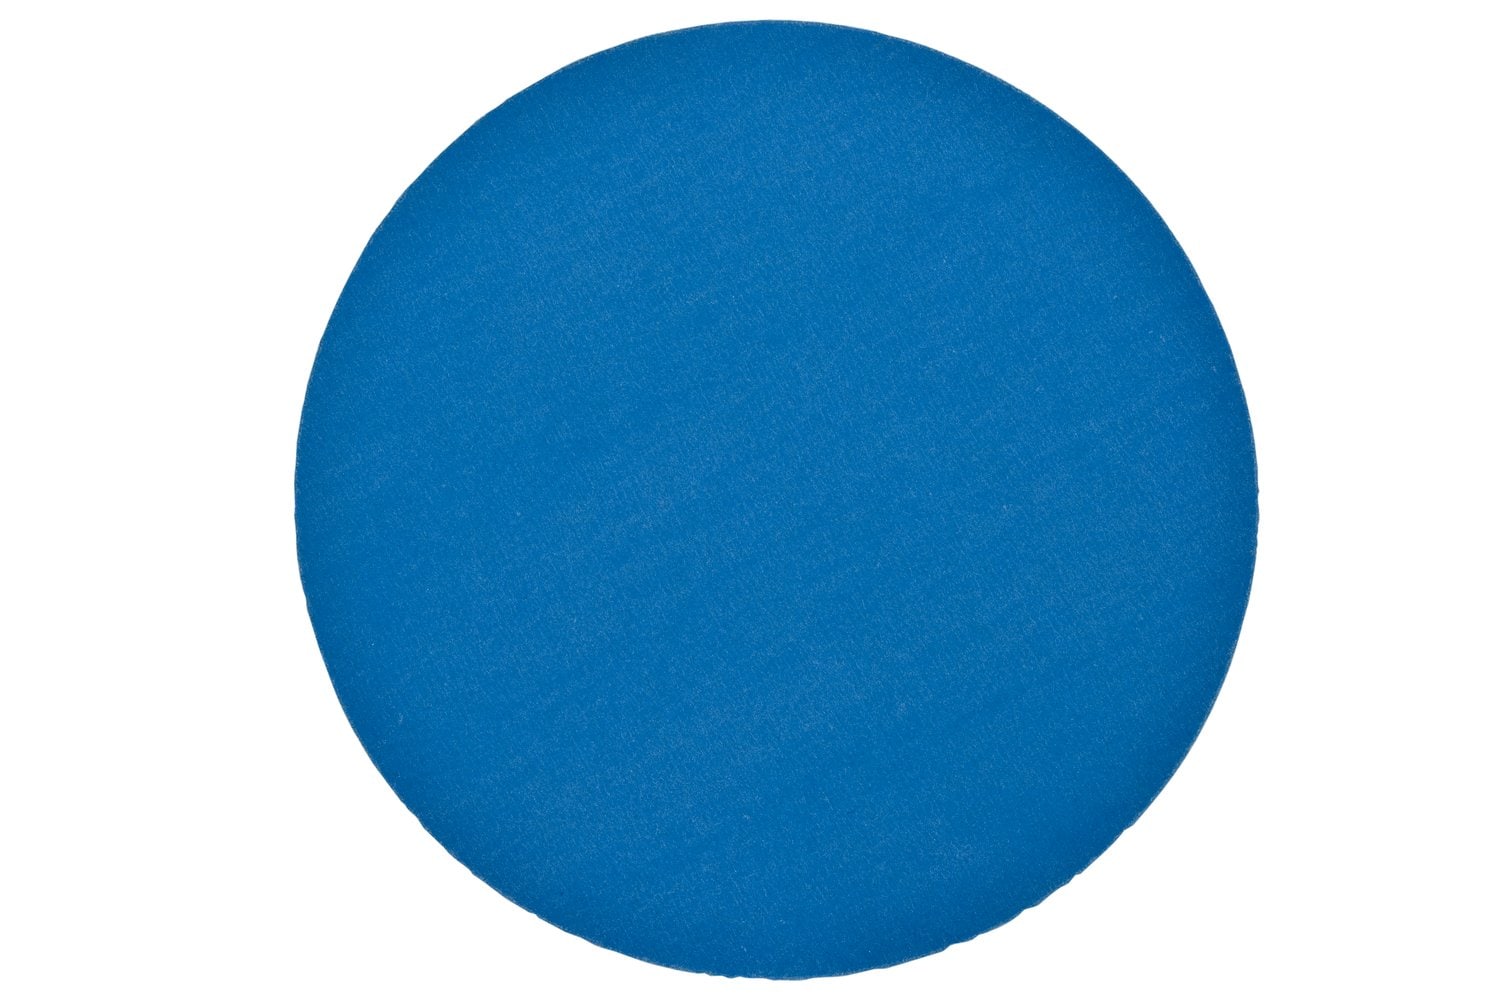 7100199691 - 3M Stikit Blue Abrasive Disc Roll, 36273, 5 in, 500 grade, No Hole, 100 discs per roll, 5 rolls per case